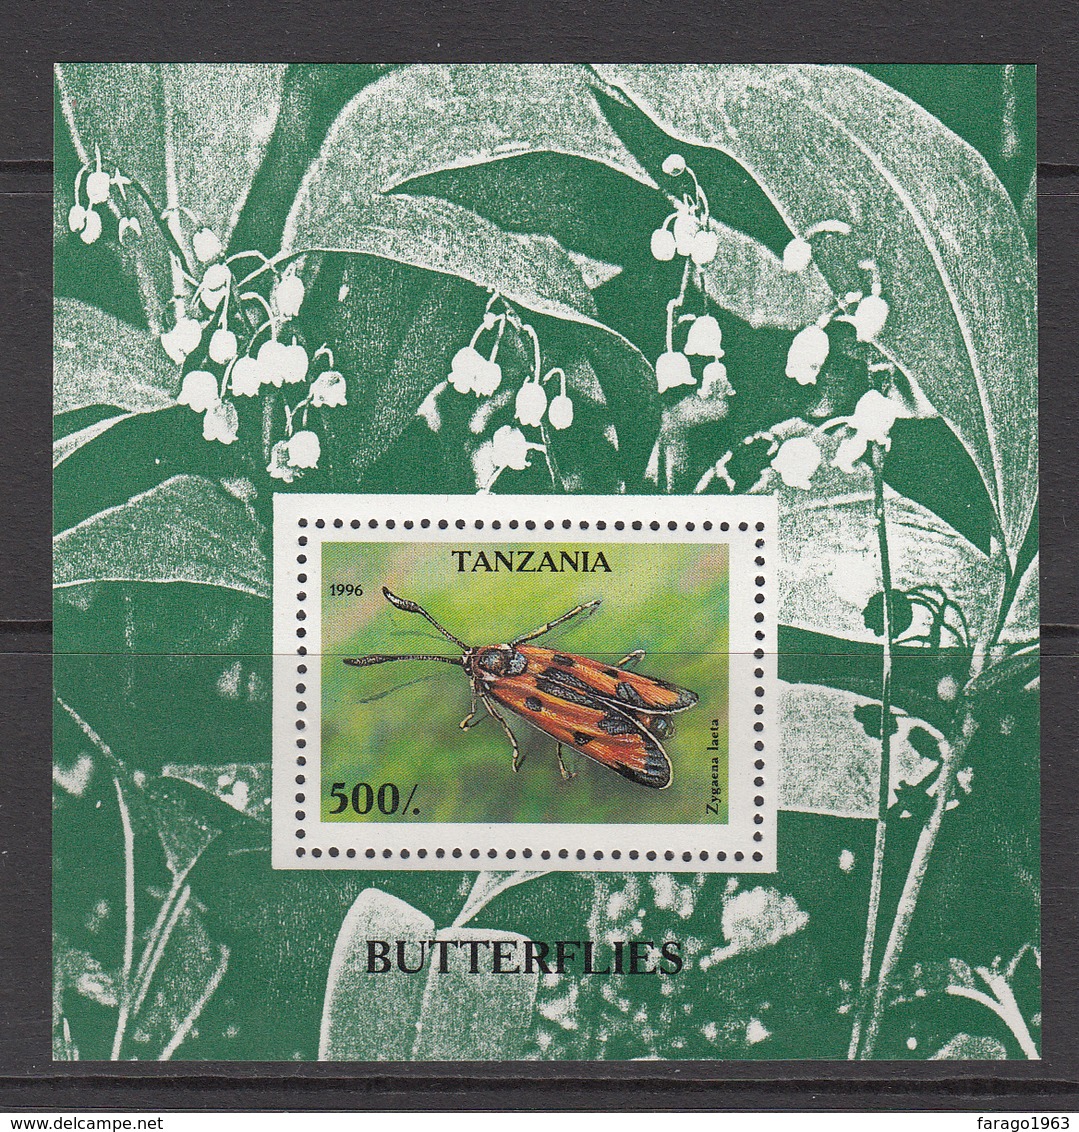 1996 Tanzania Butterflies Souvenir Sheet Of 1 MNH - Tanzania (1964-...)